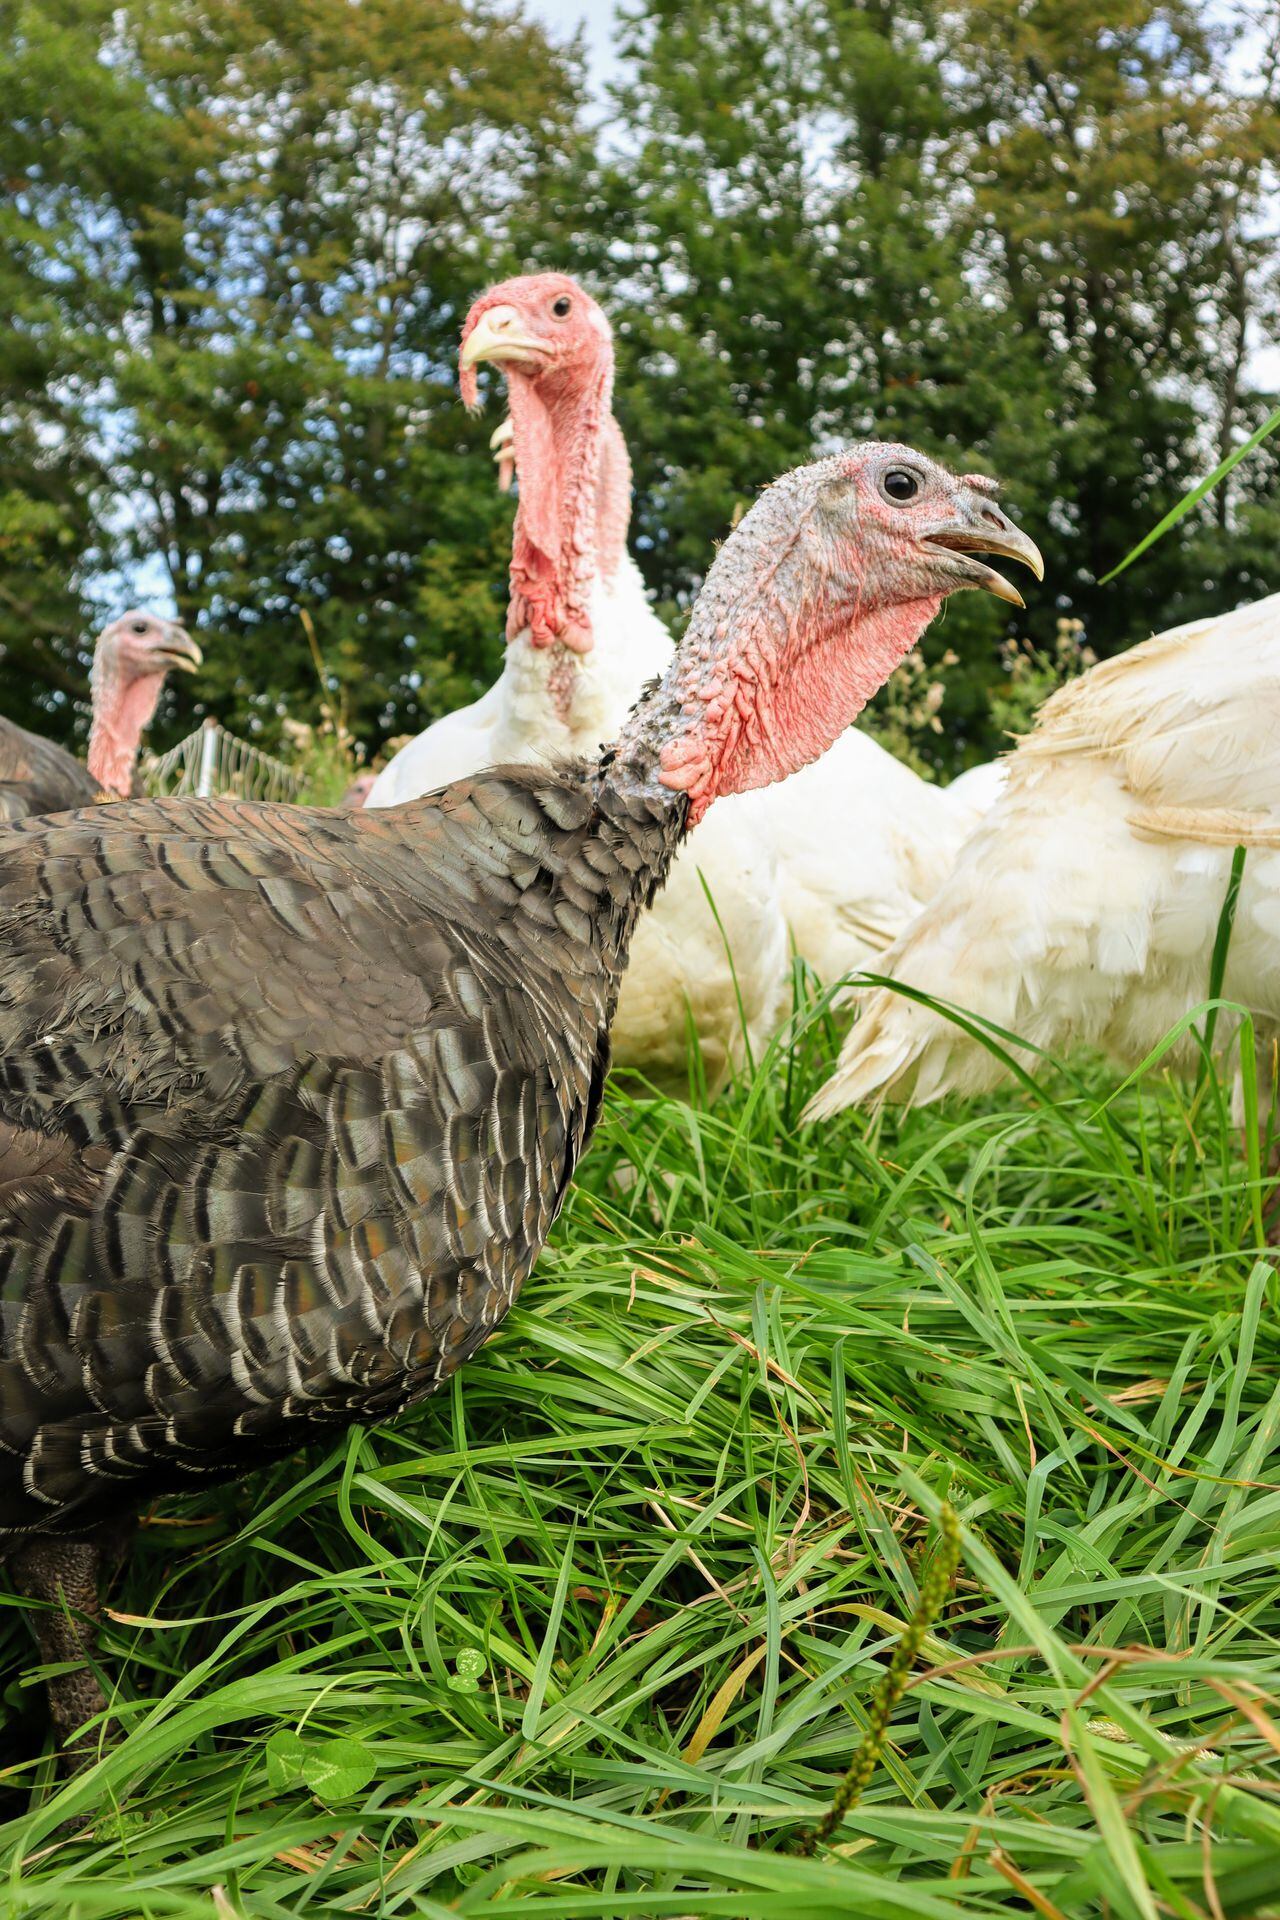 Thanksgiving turkeys from Upstate New York